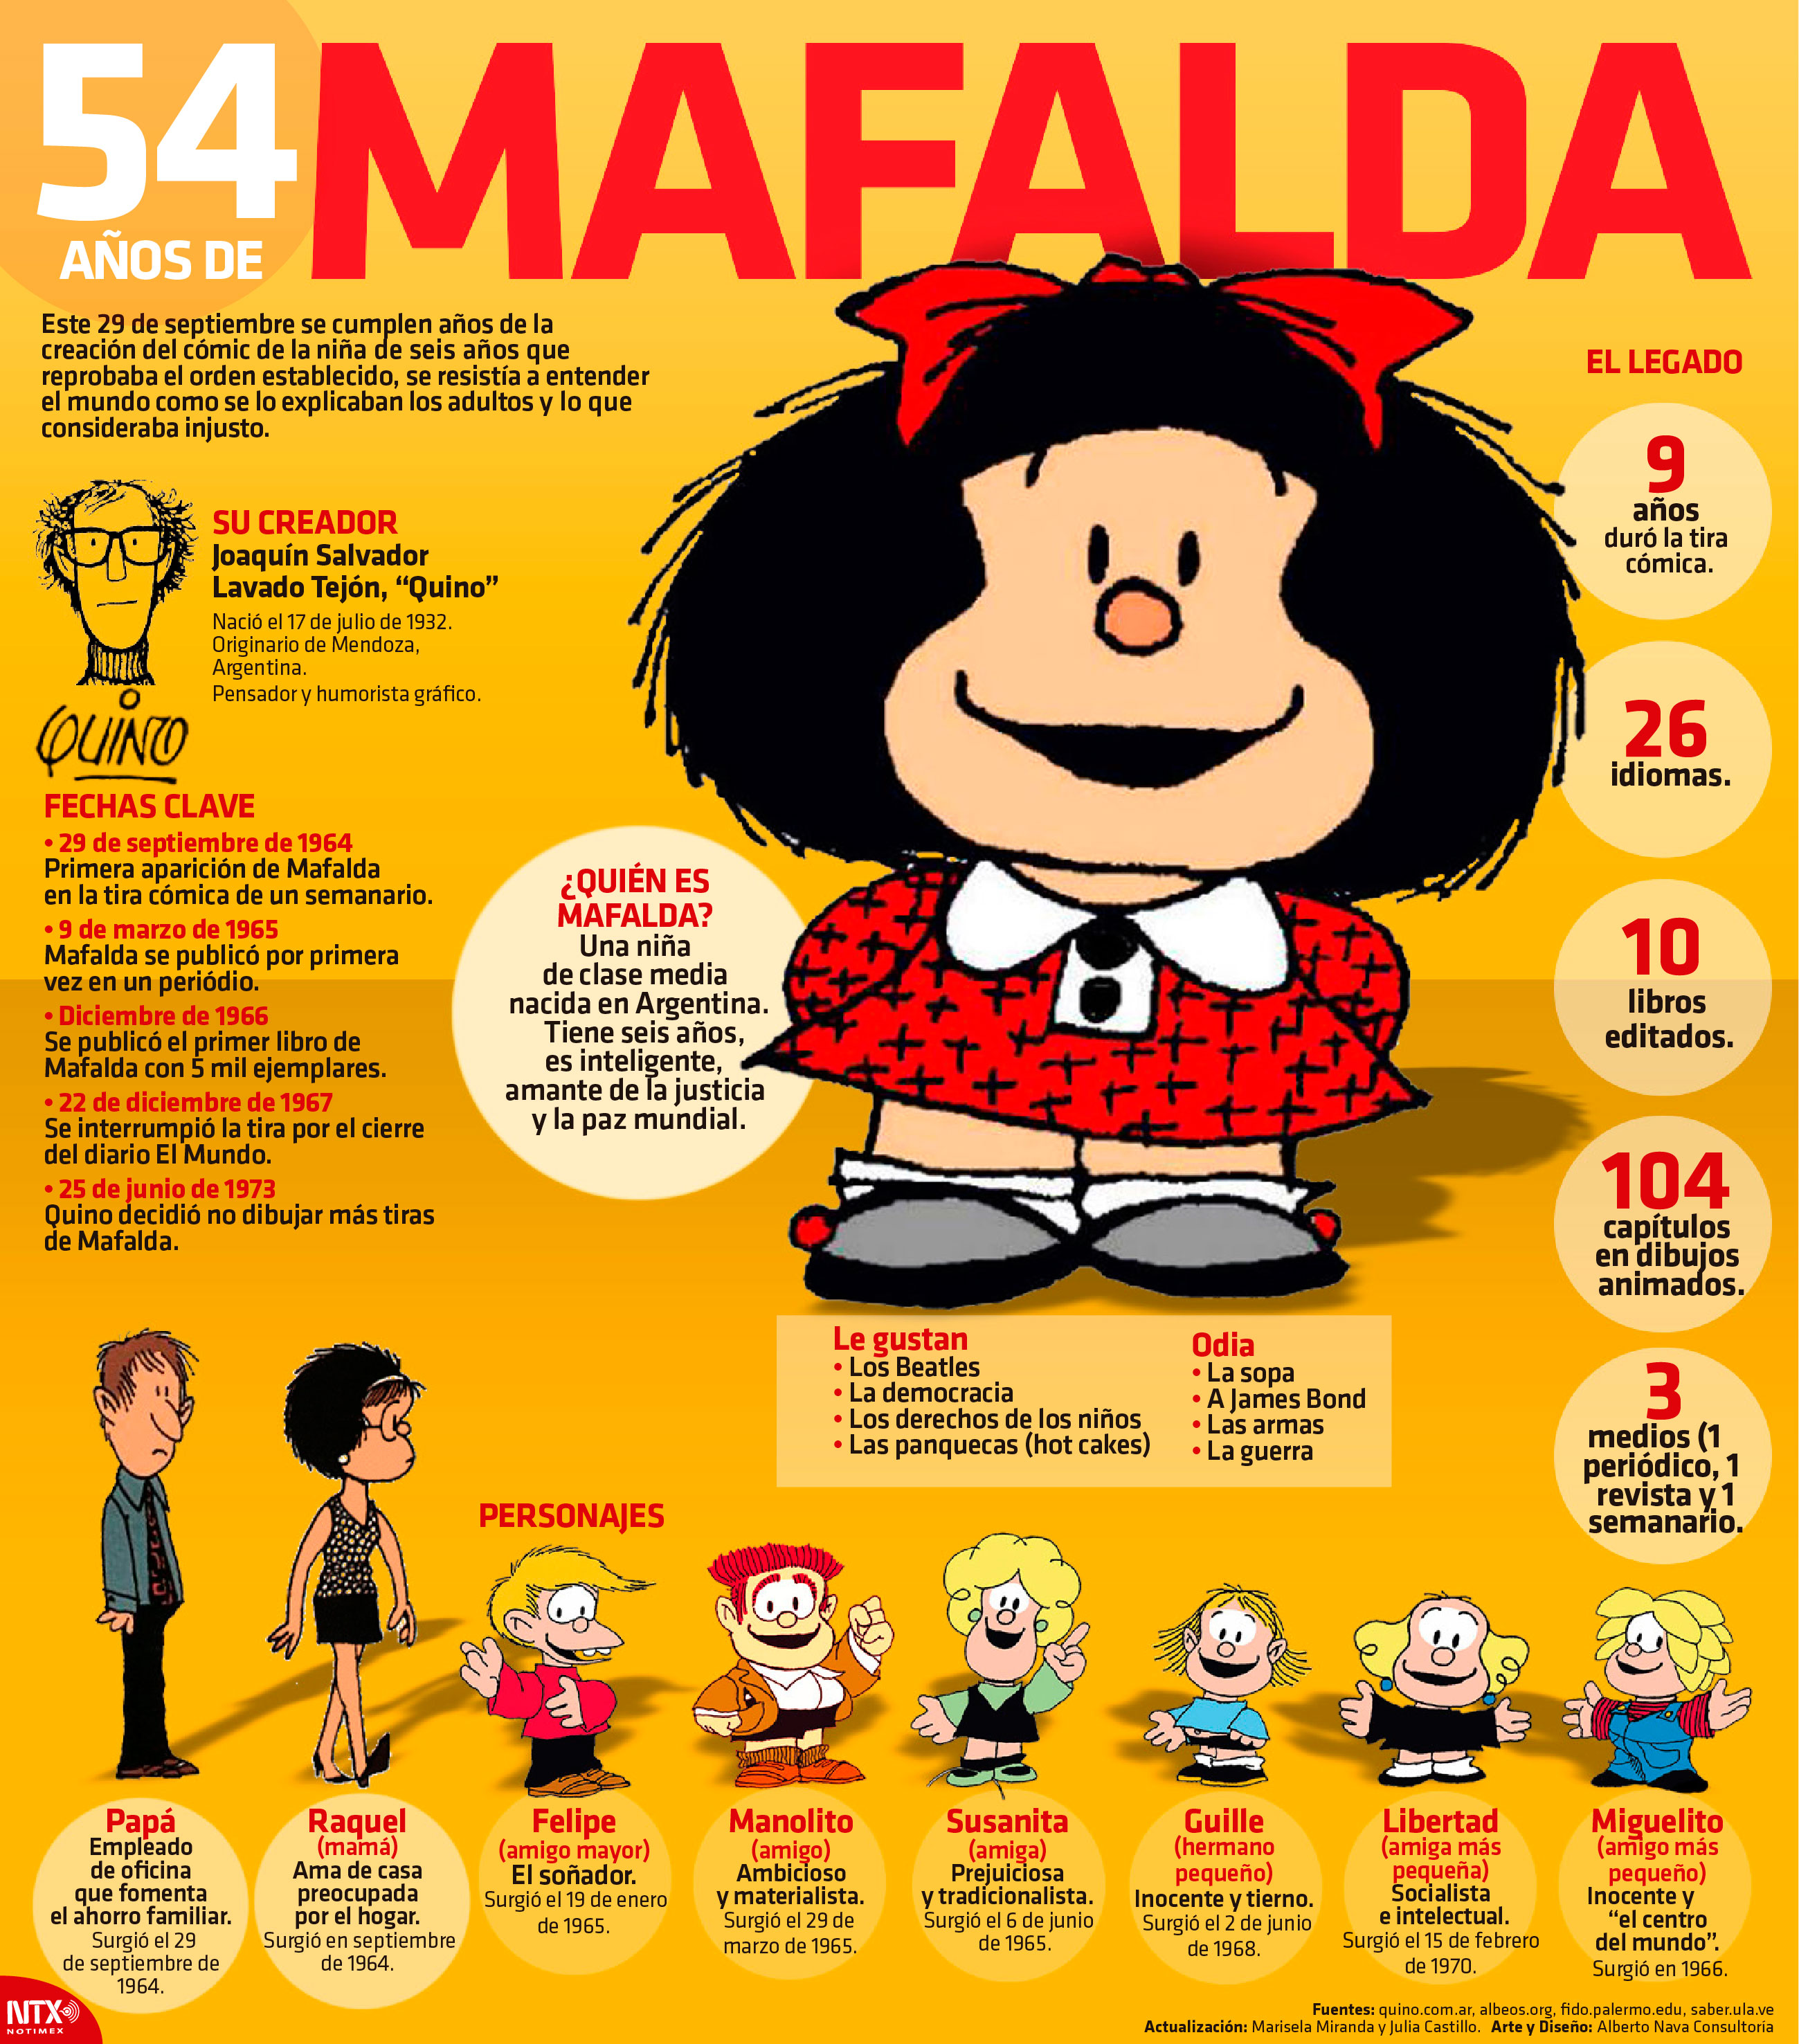 54 aos de Mafalda